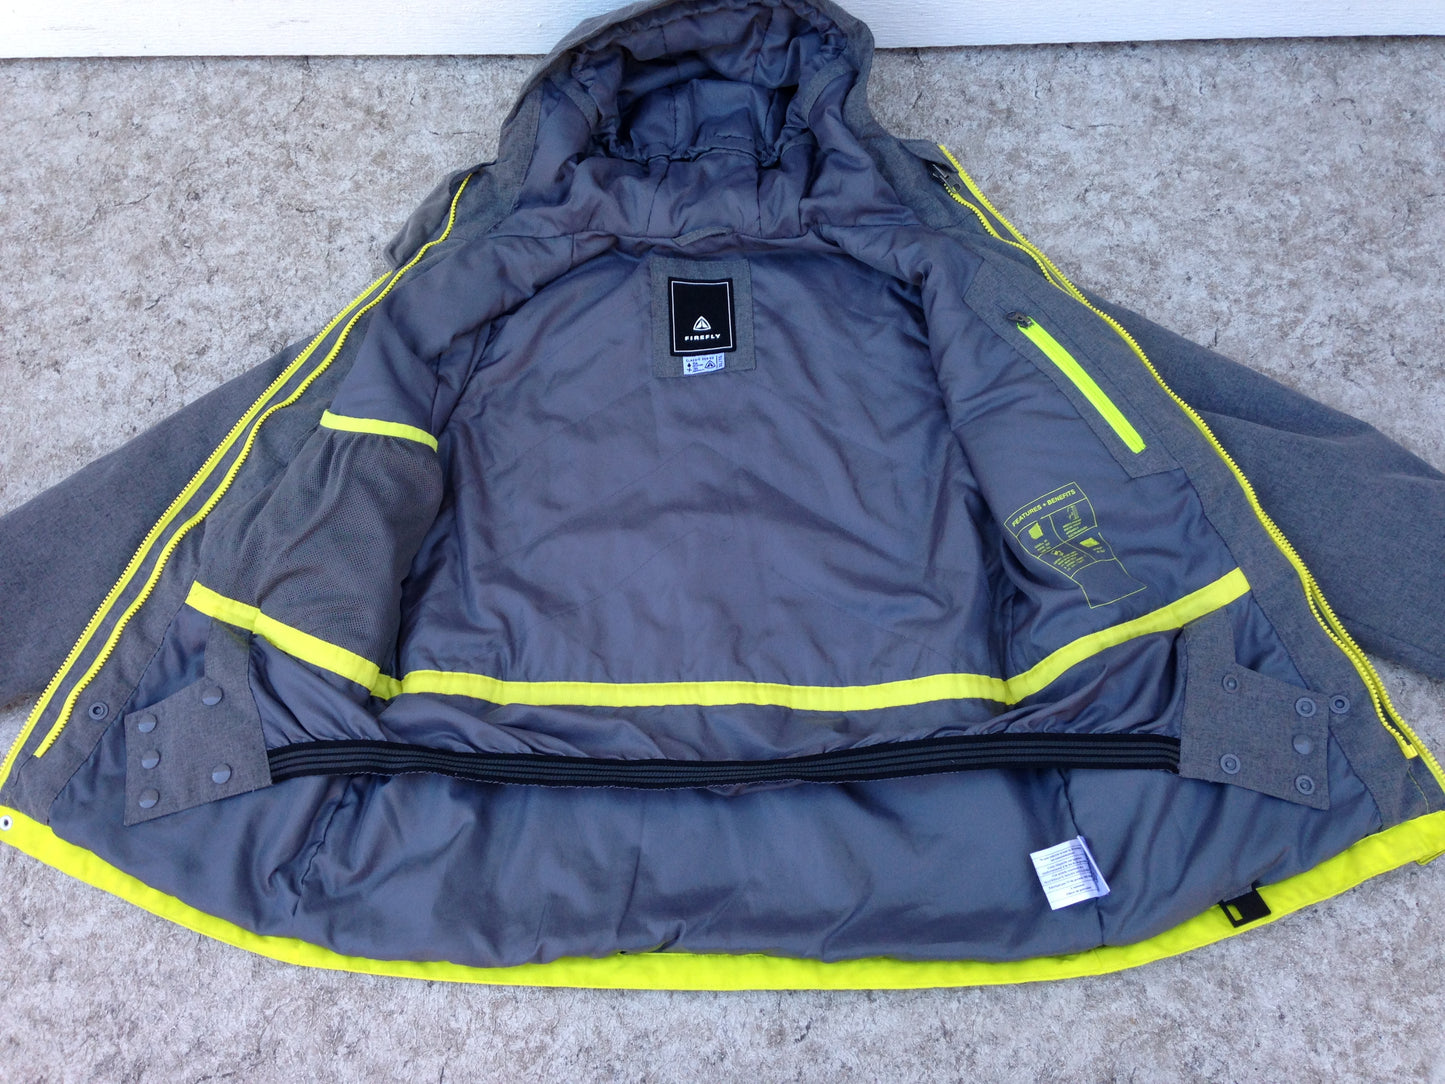 Winter Coat Child Size 14-16 Firefly Grey Lime Snow Belt Snowboarding New Demo Model